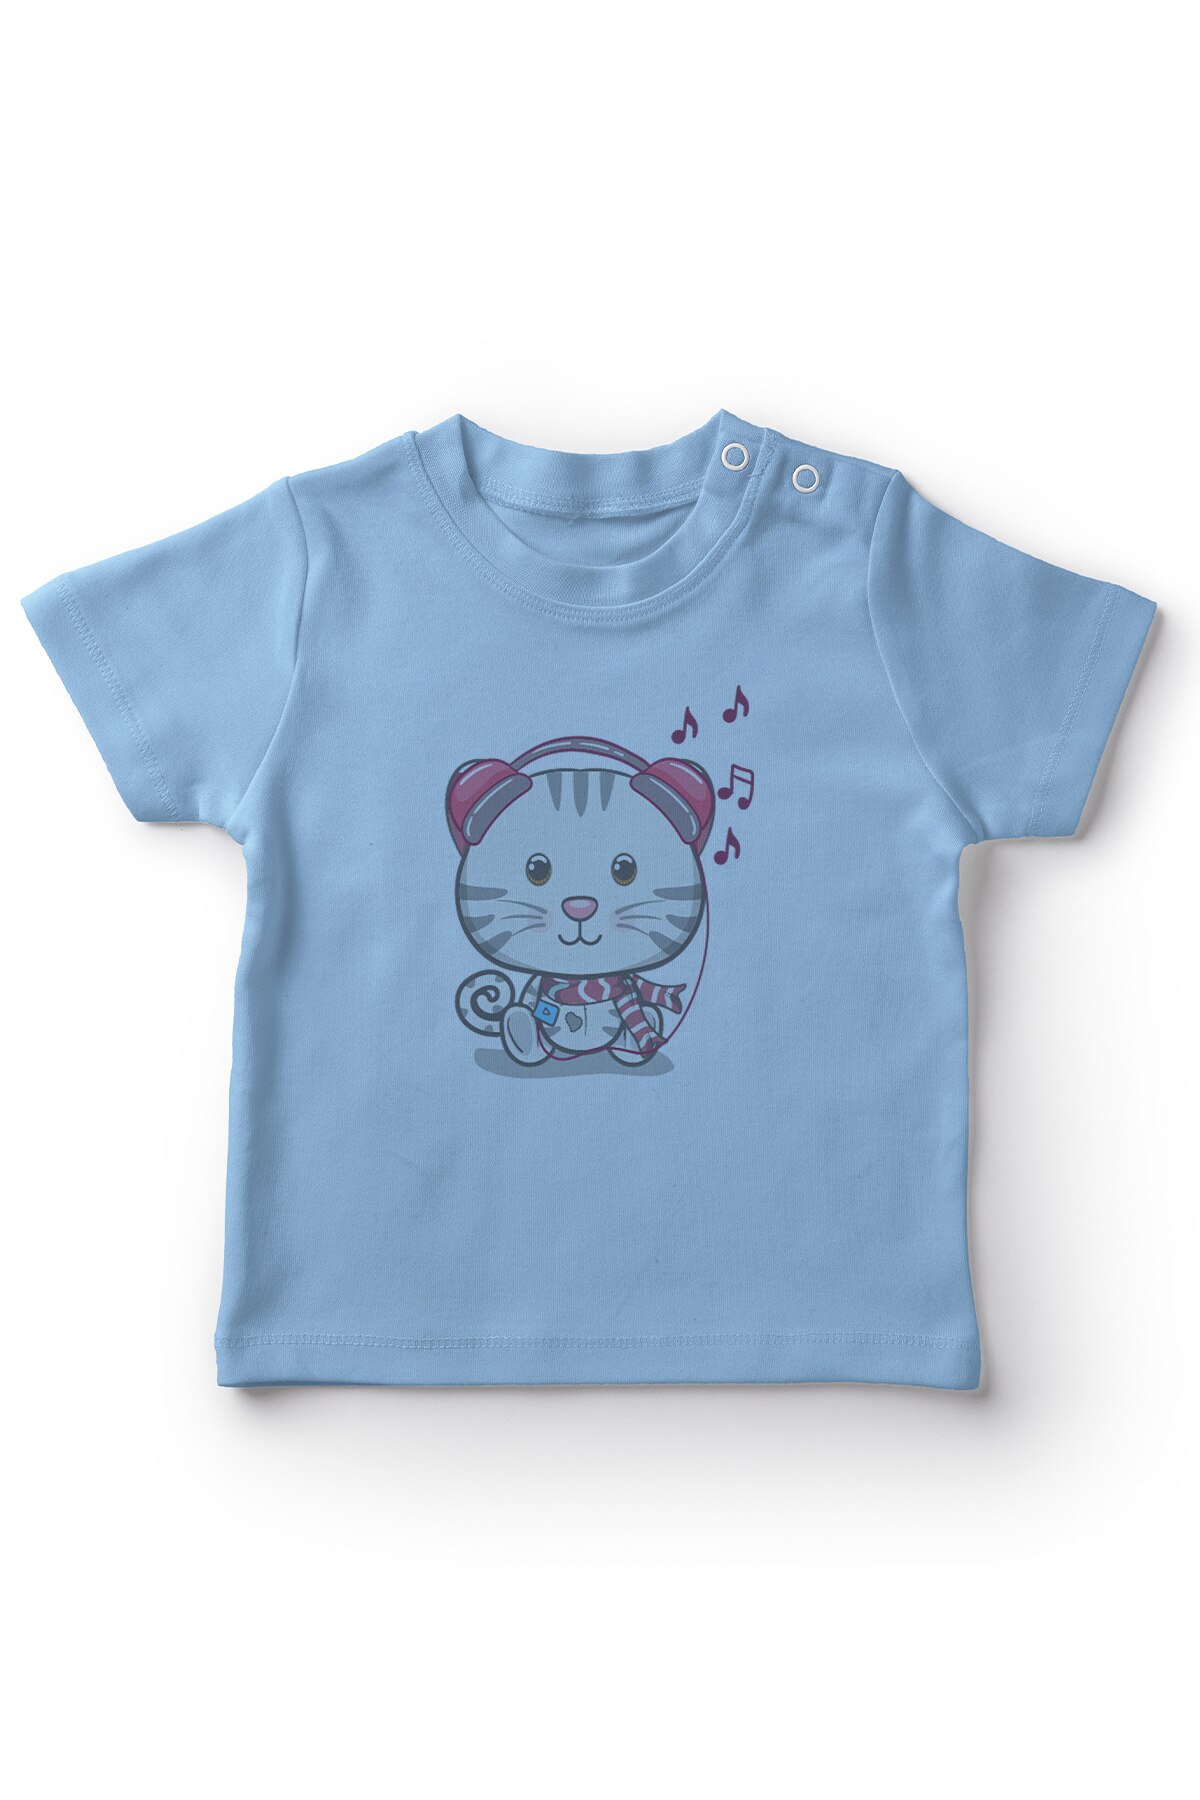 Angemiel baby der lytter til musik kat baby dreng t-shirt blå